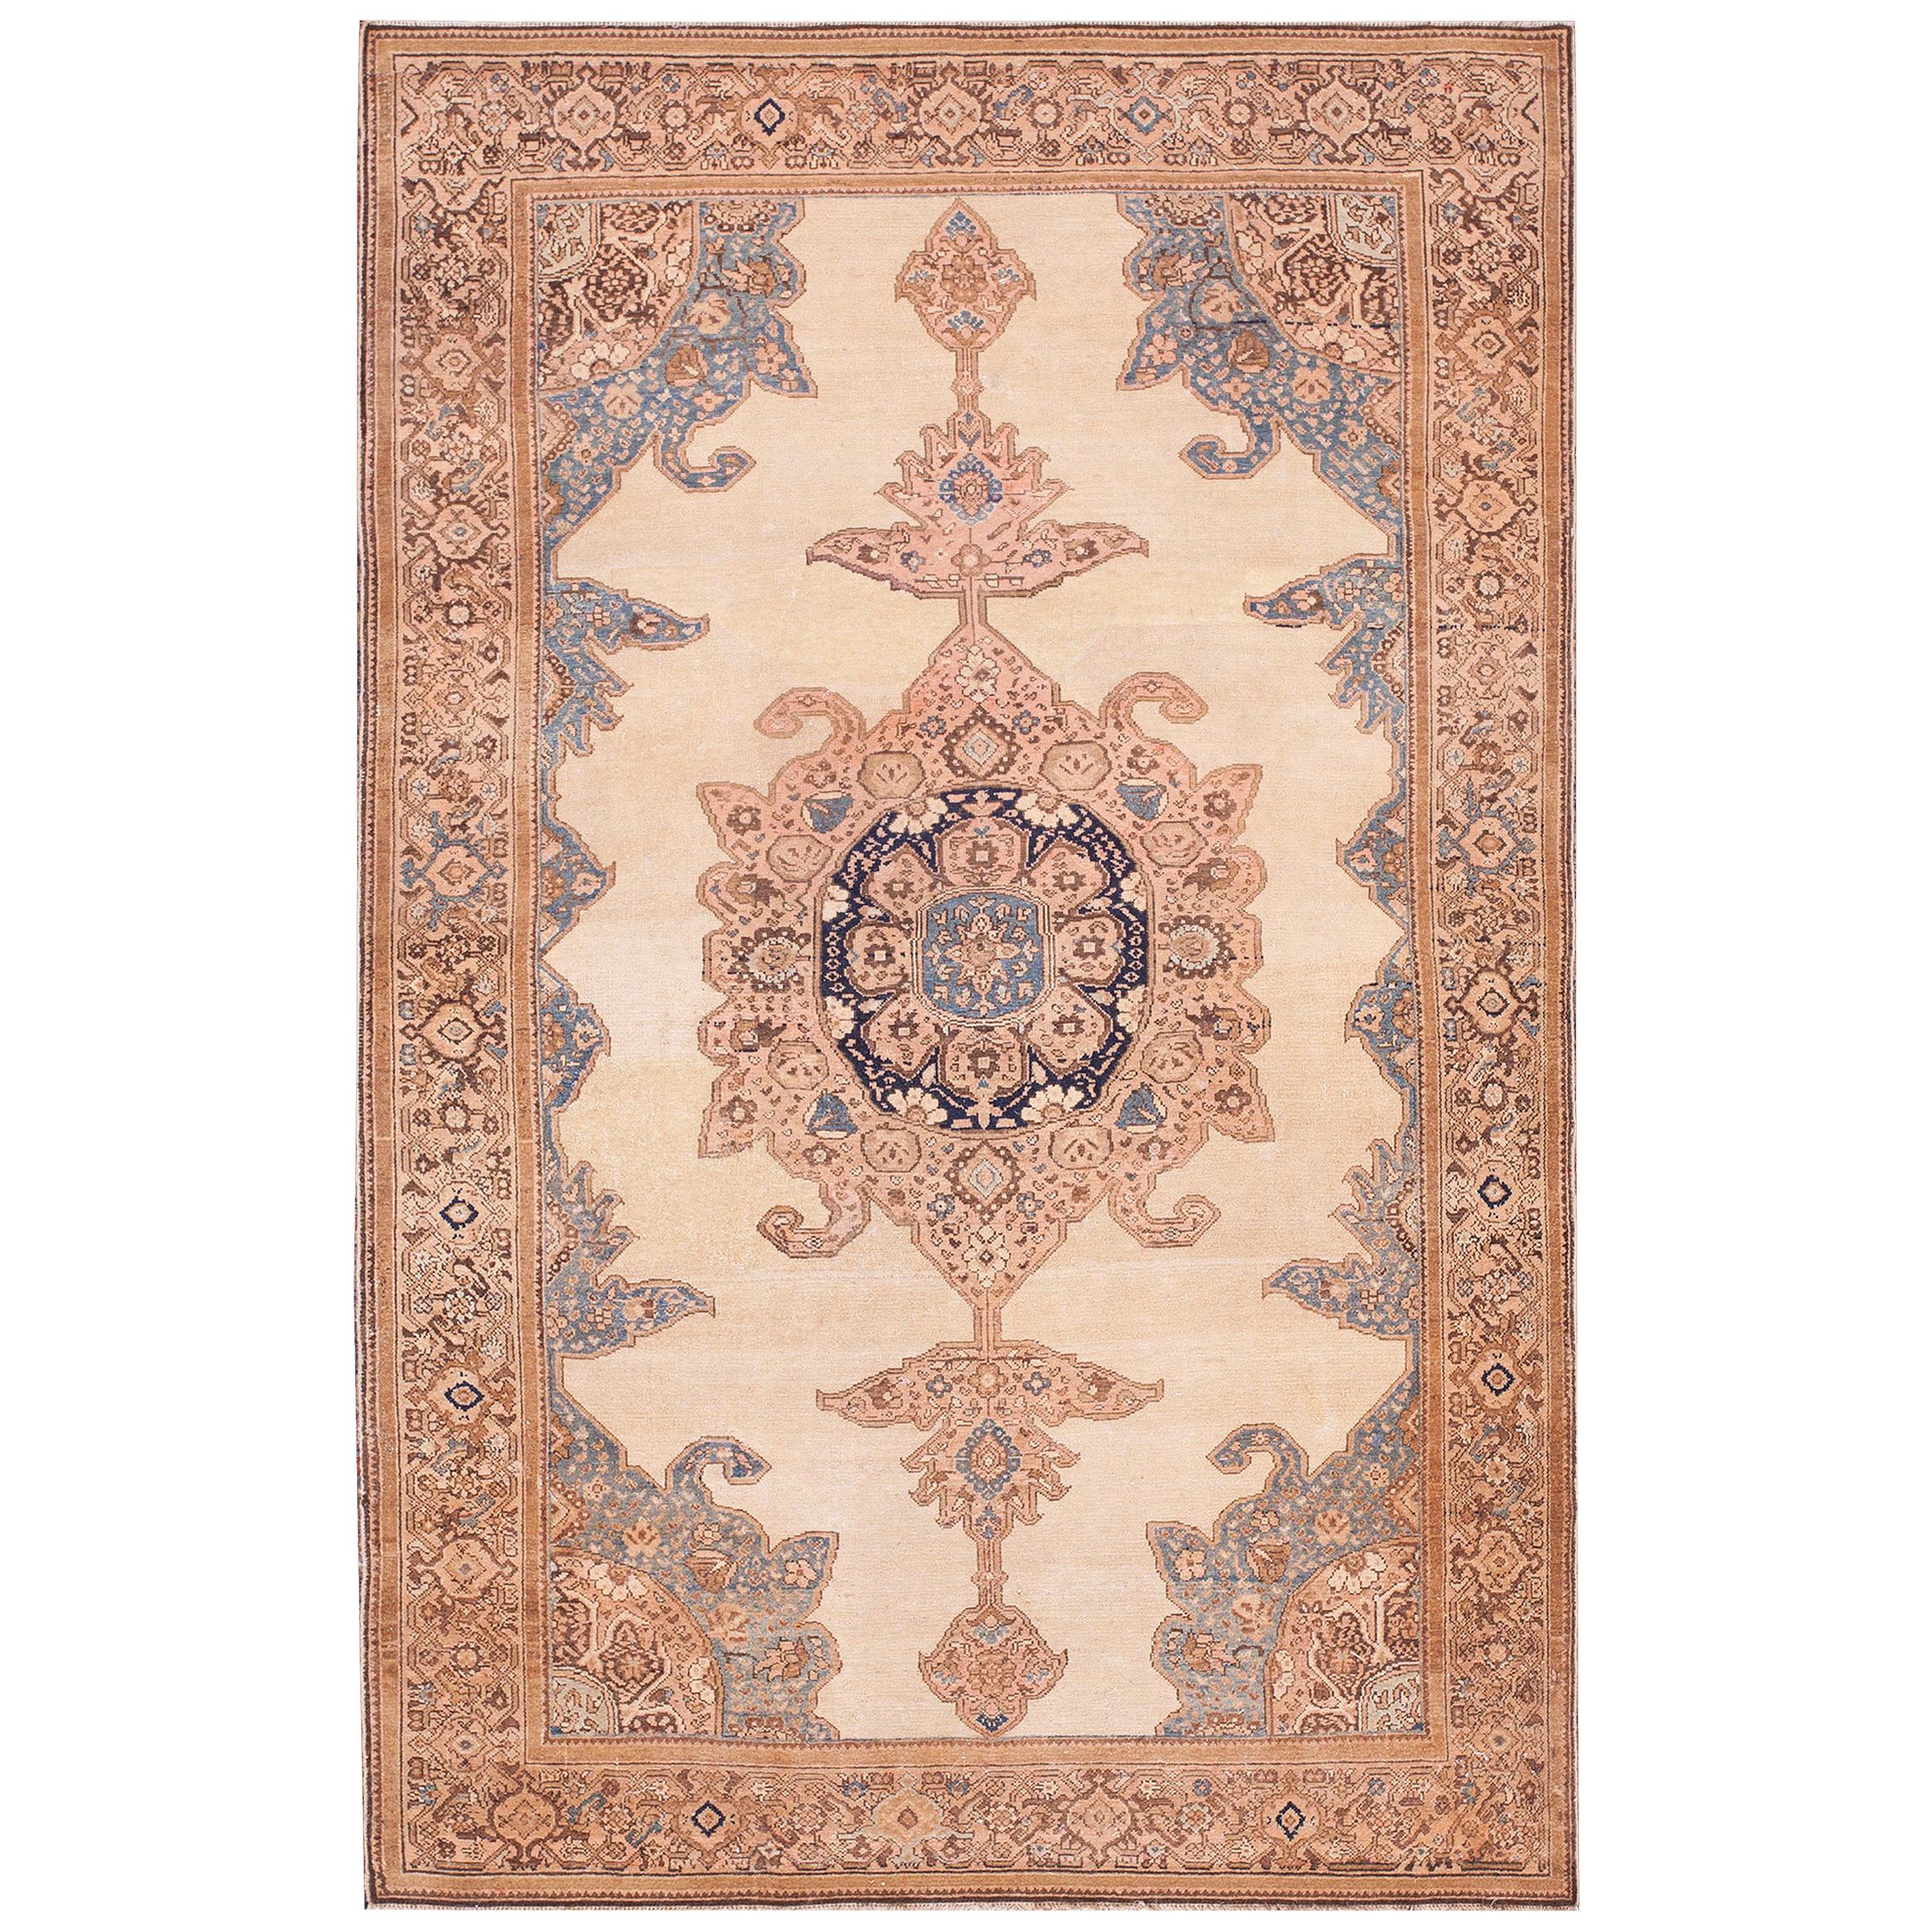 Early 20th Century Persian Malayer Carpet ( 4' x 6'6" - 122 x 198 )